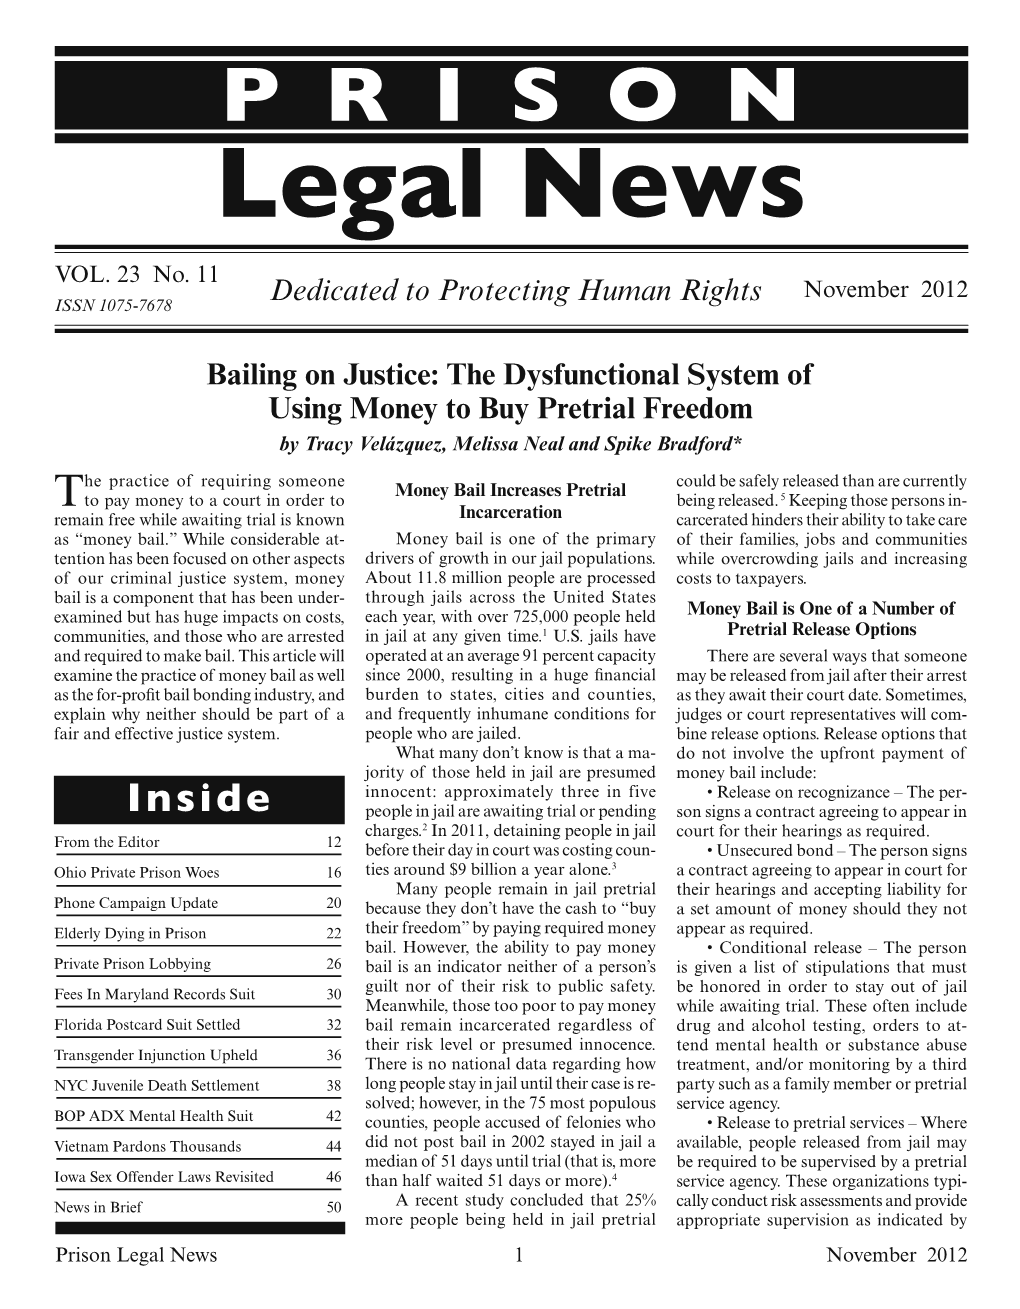 PRISON Legal News VOL